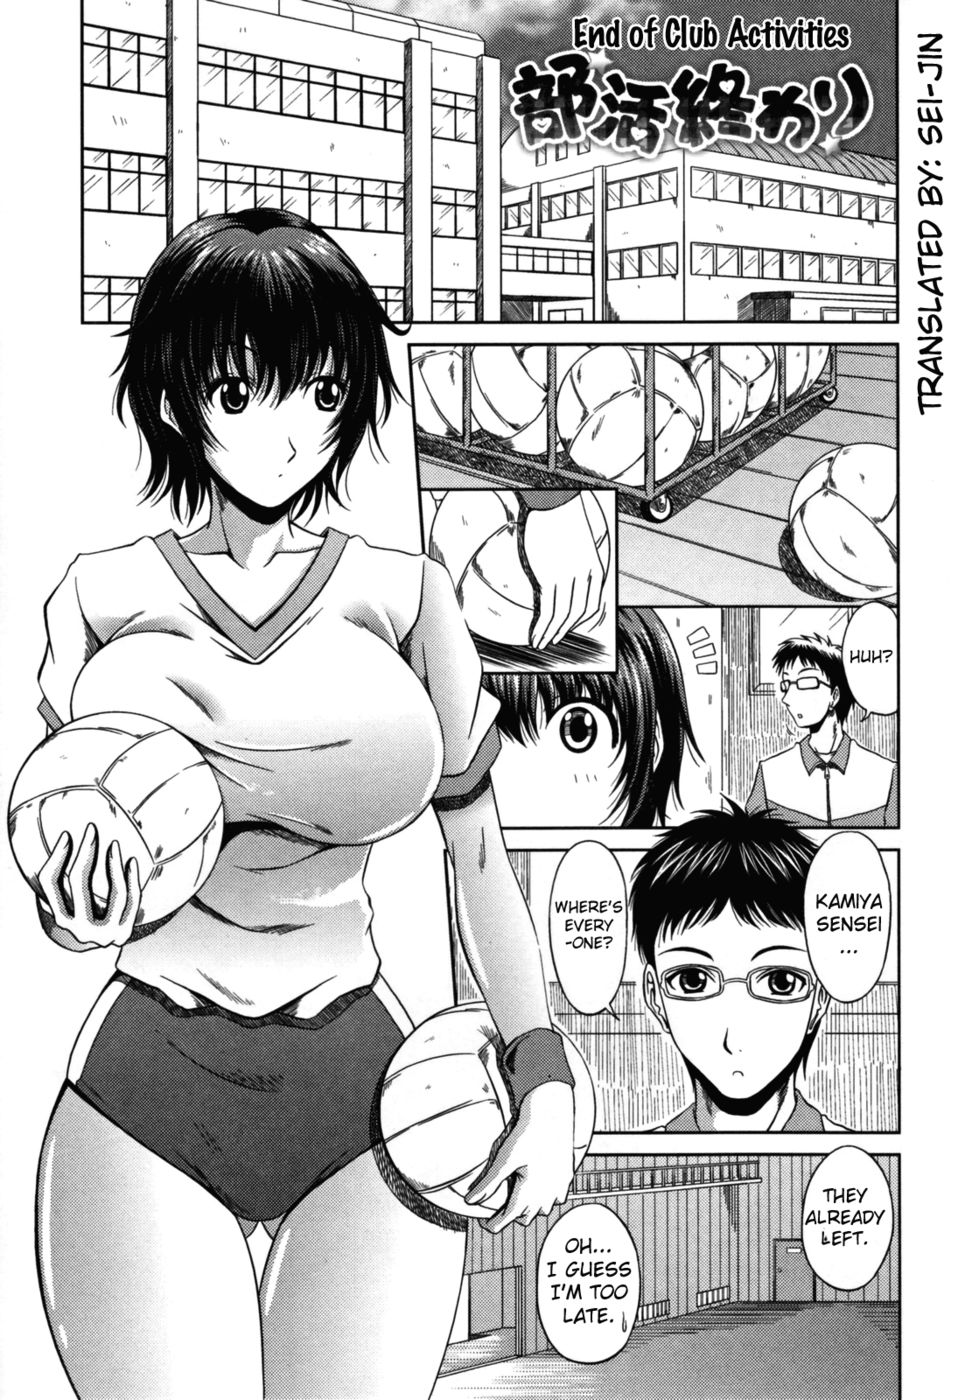 Hentai Manga Comic-End of Club Activities-Read-1